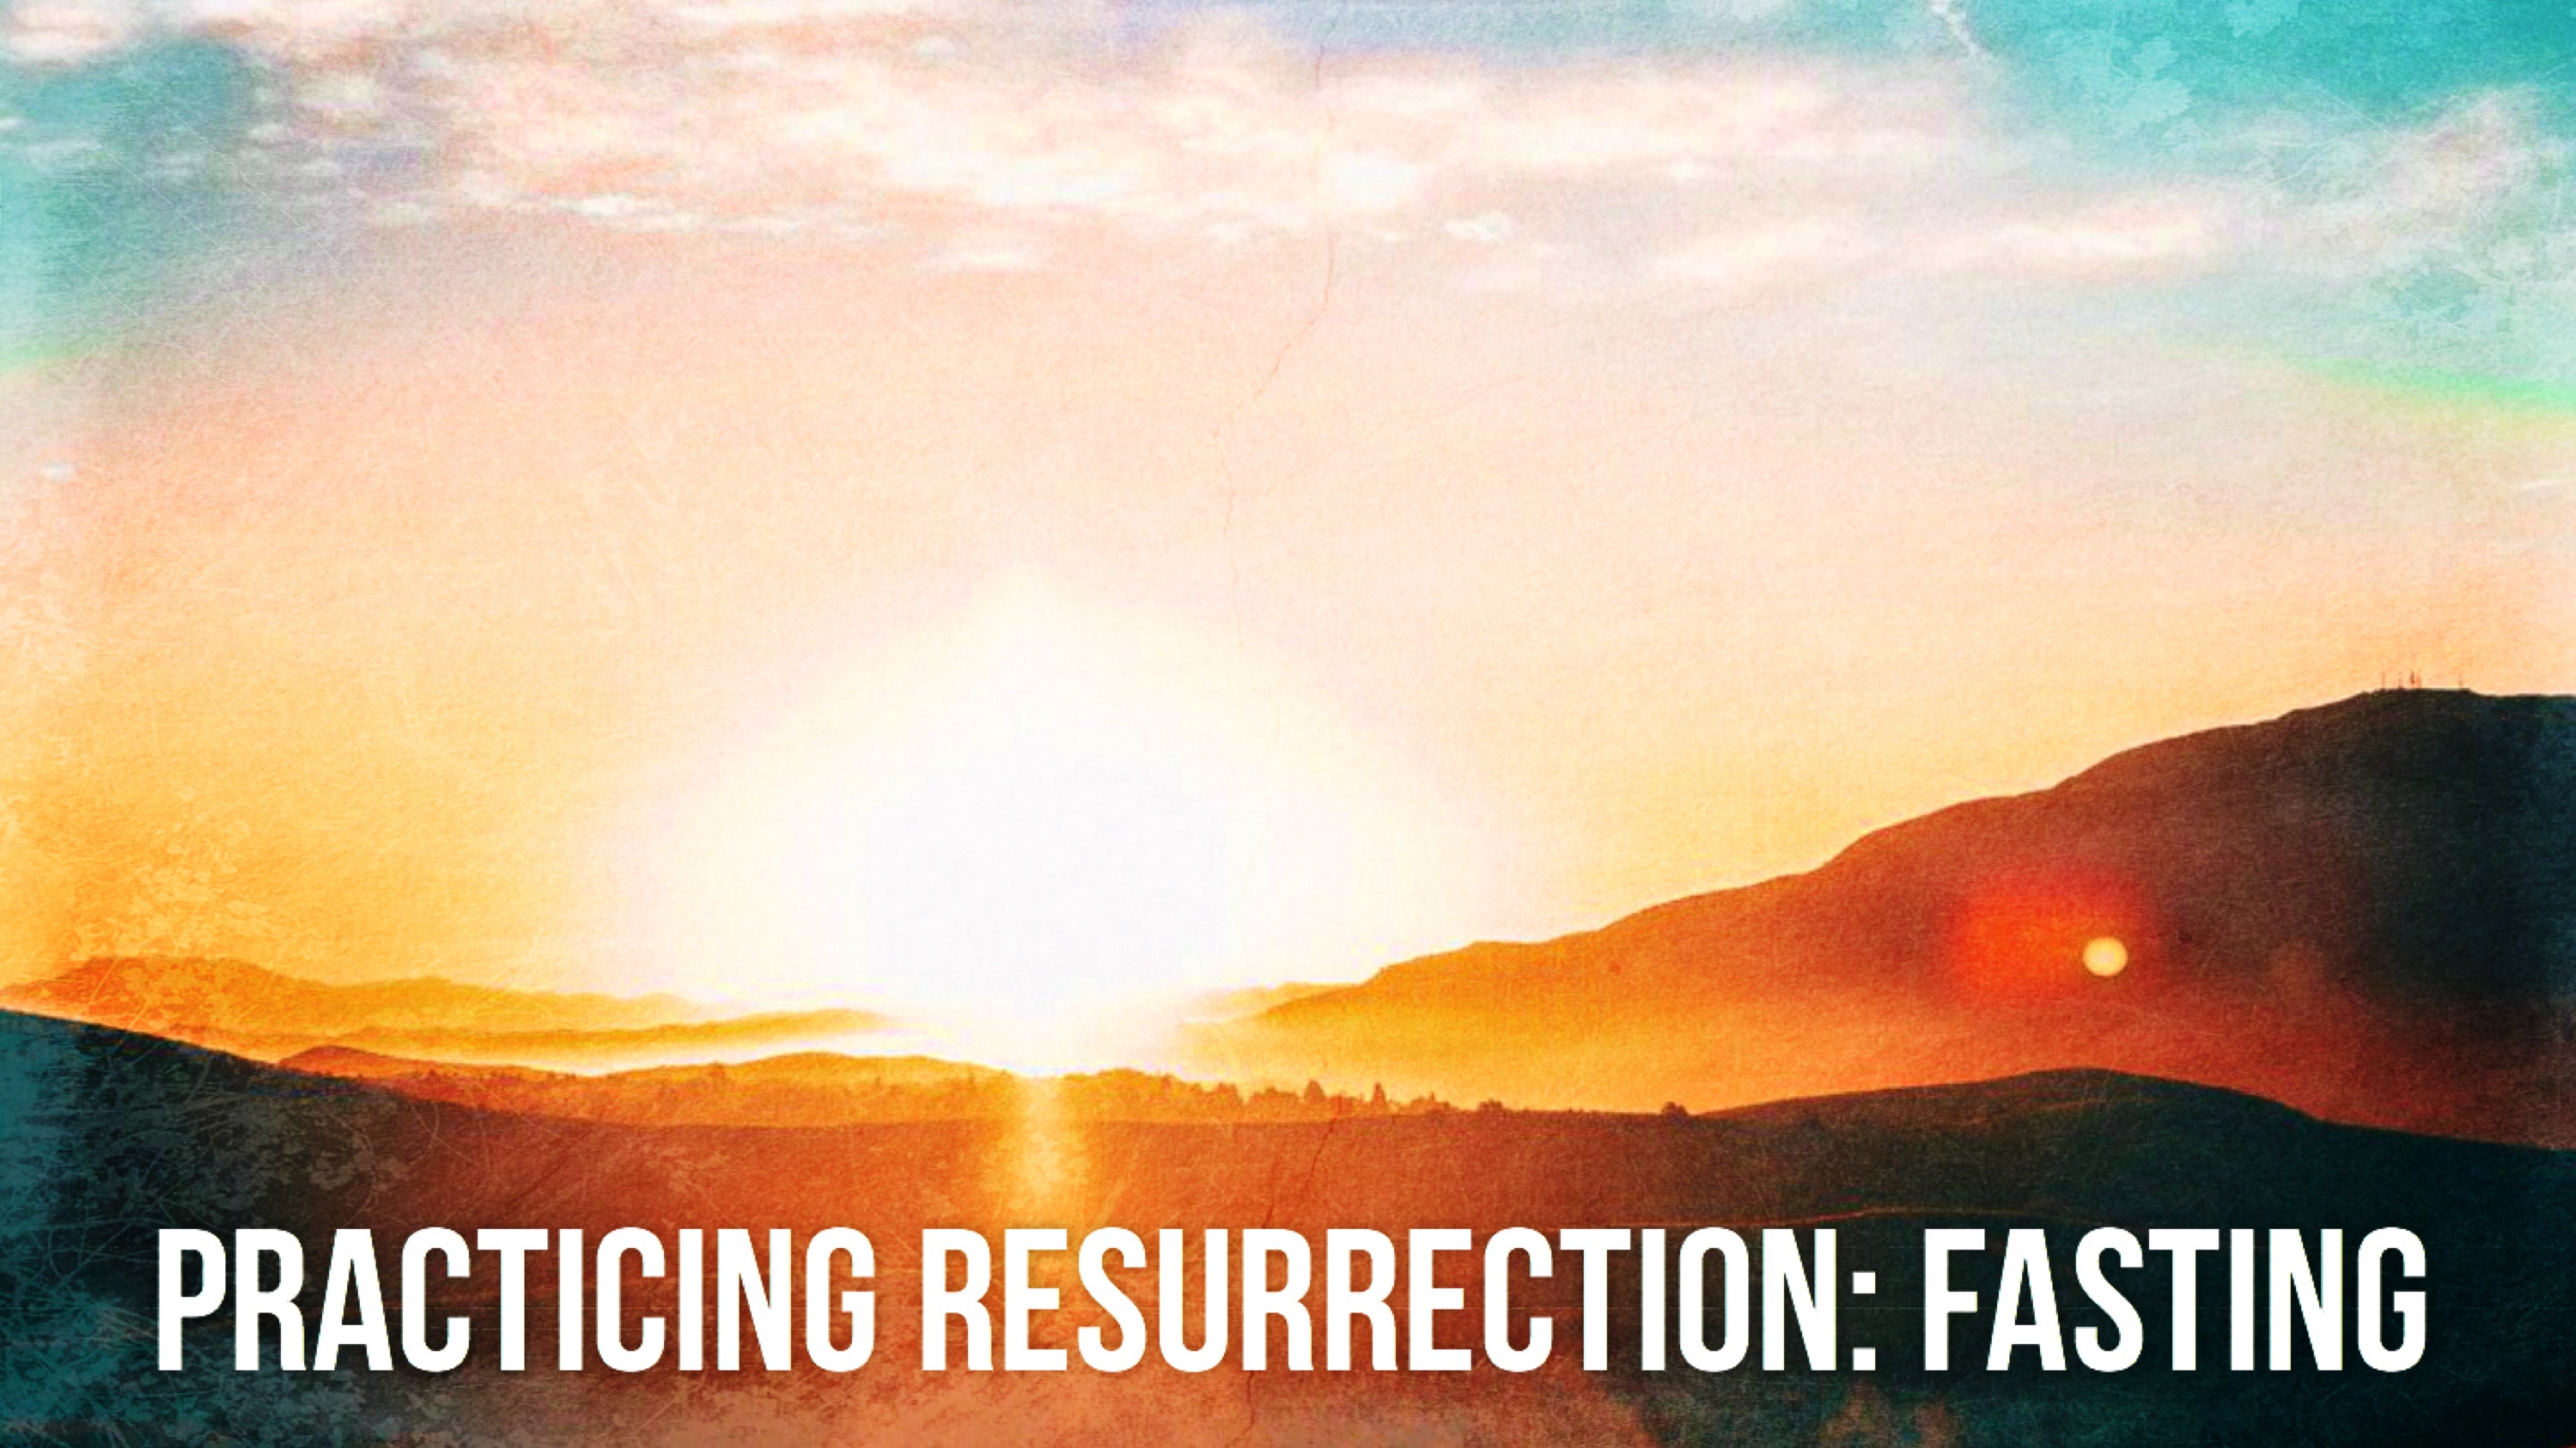 Ryan Post - "Practicing Resurrection: Fasting"